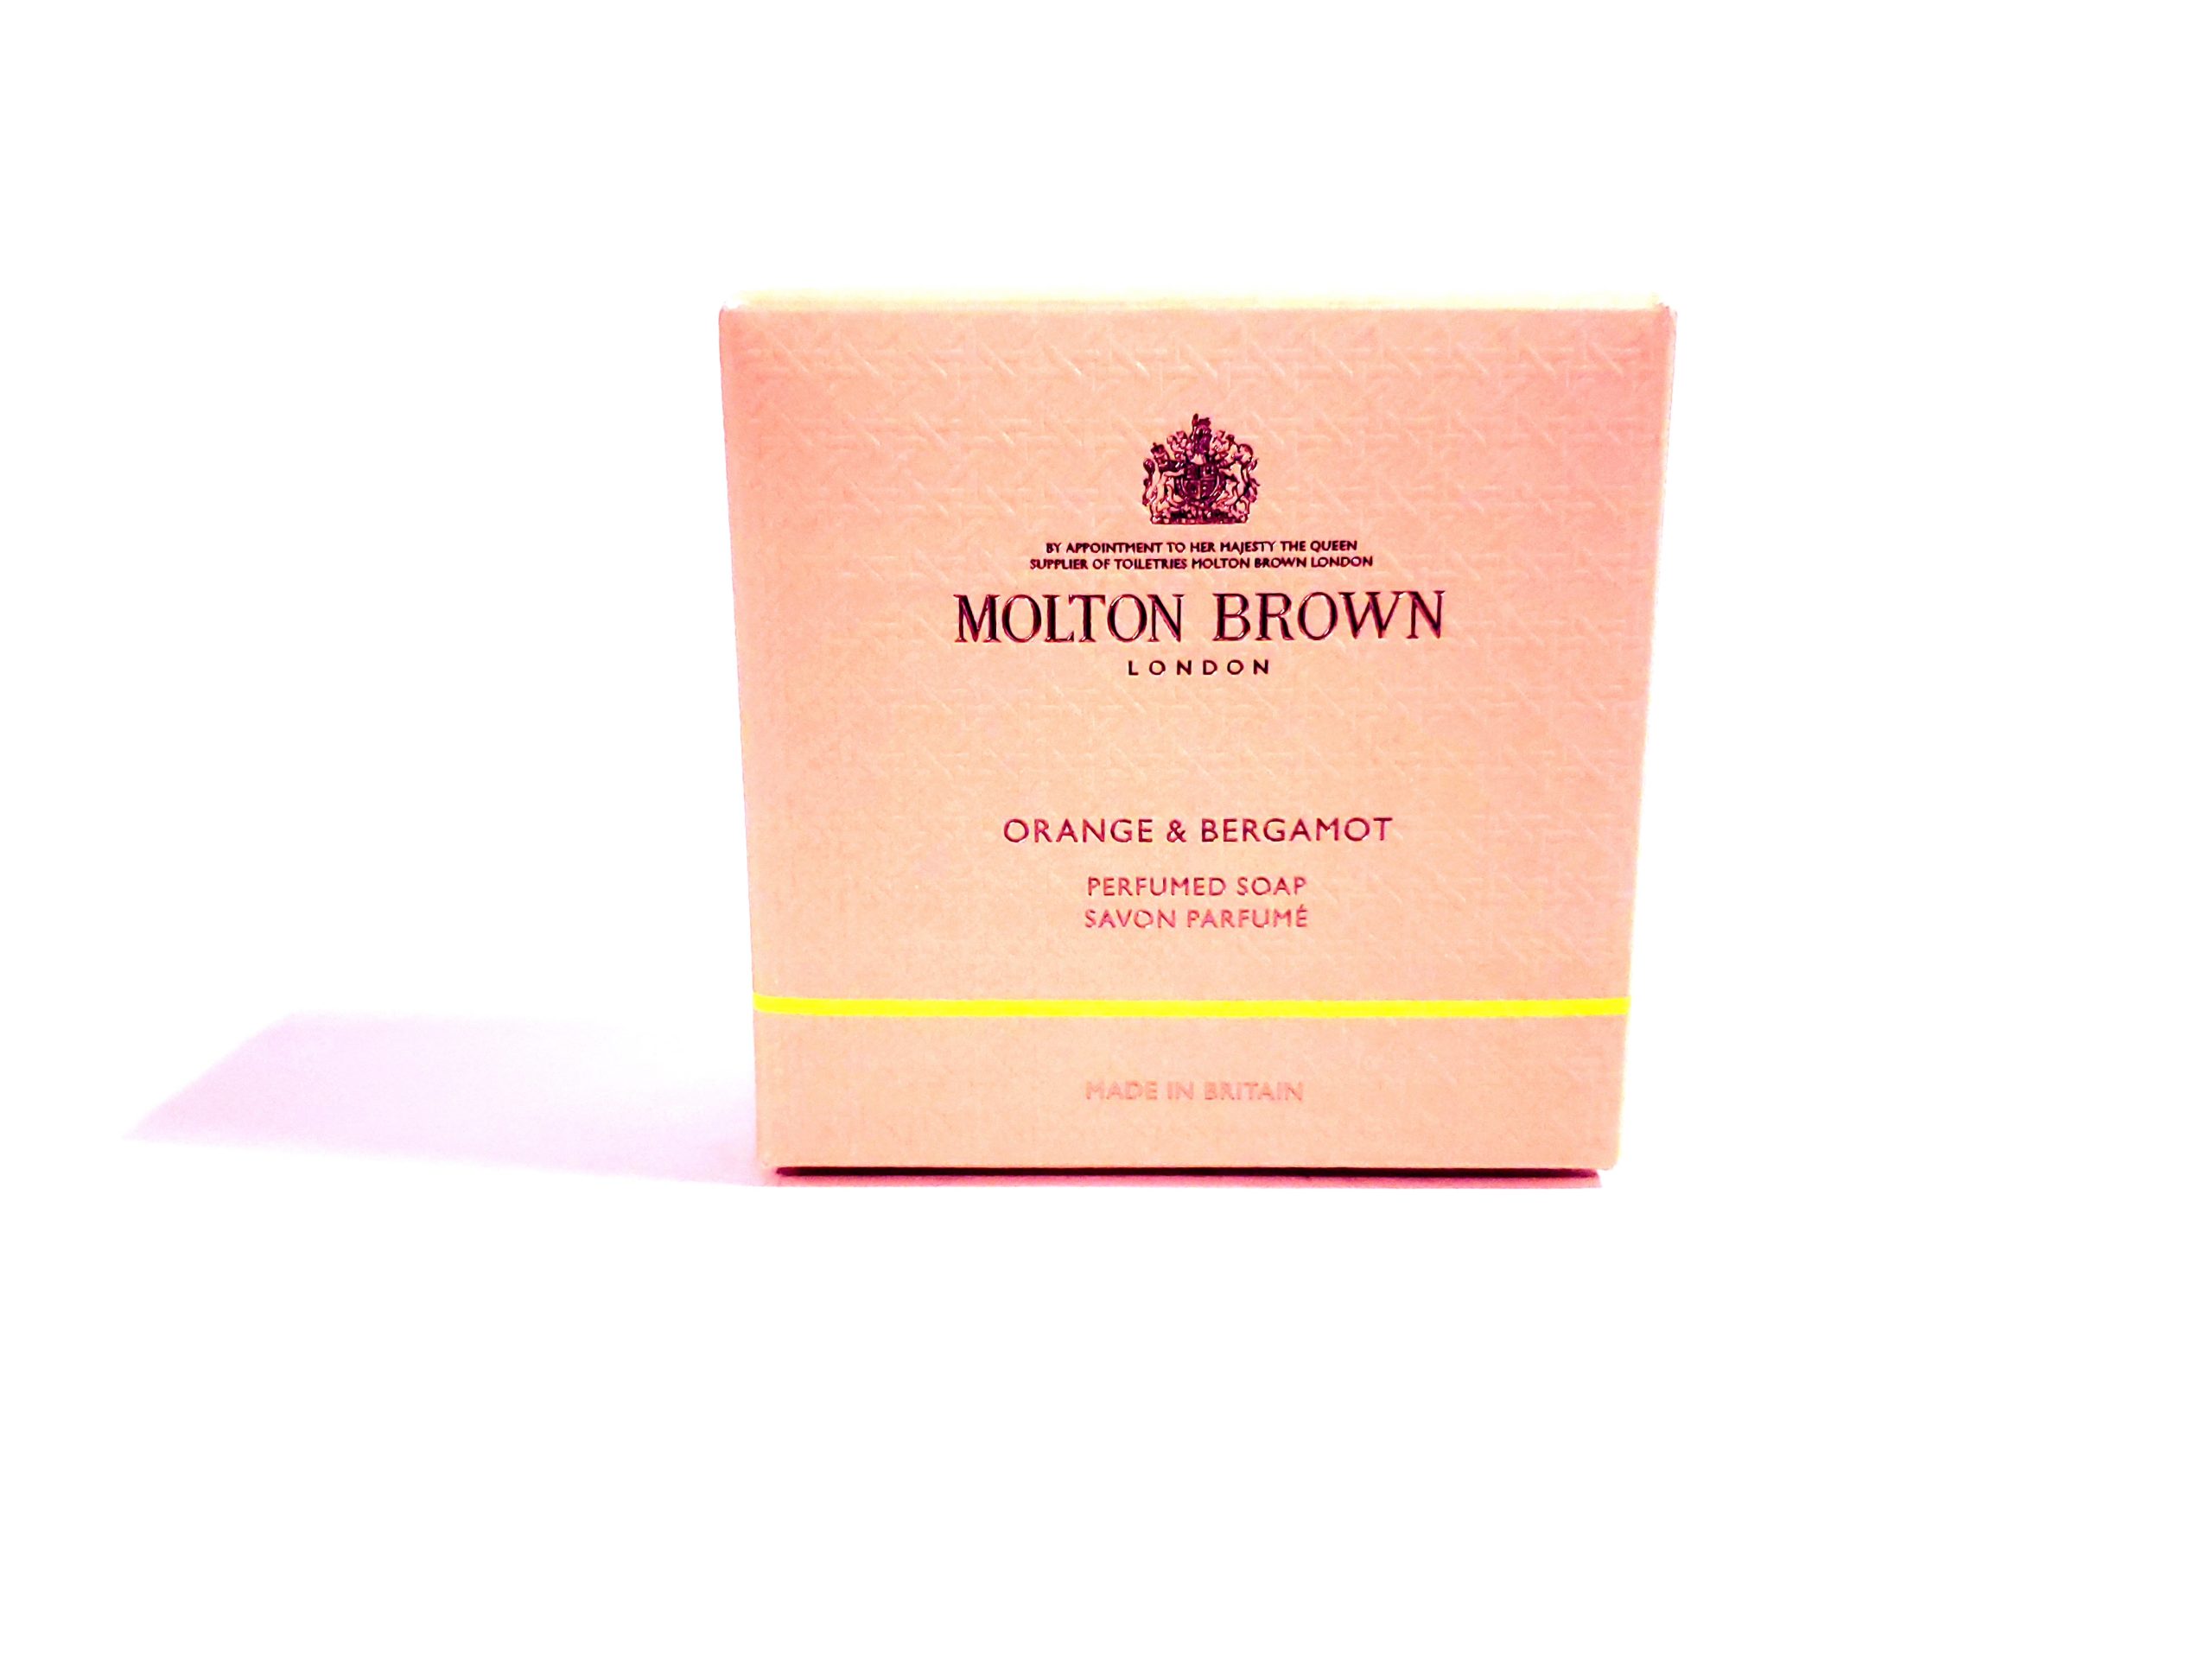 A box of Molton Brown’s Orange & Bergamot perfumed bar of soap, 150g.